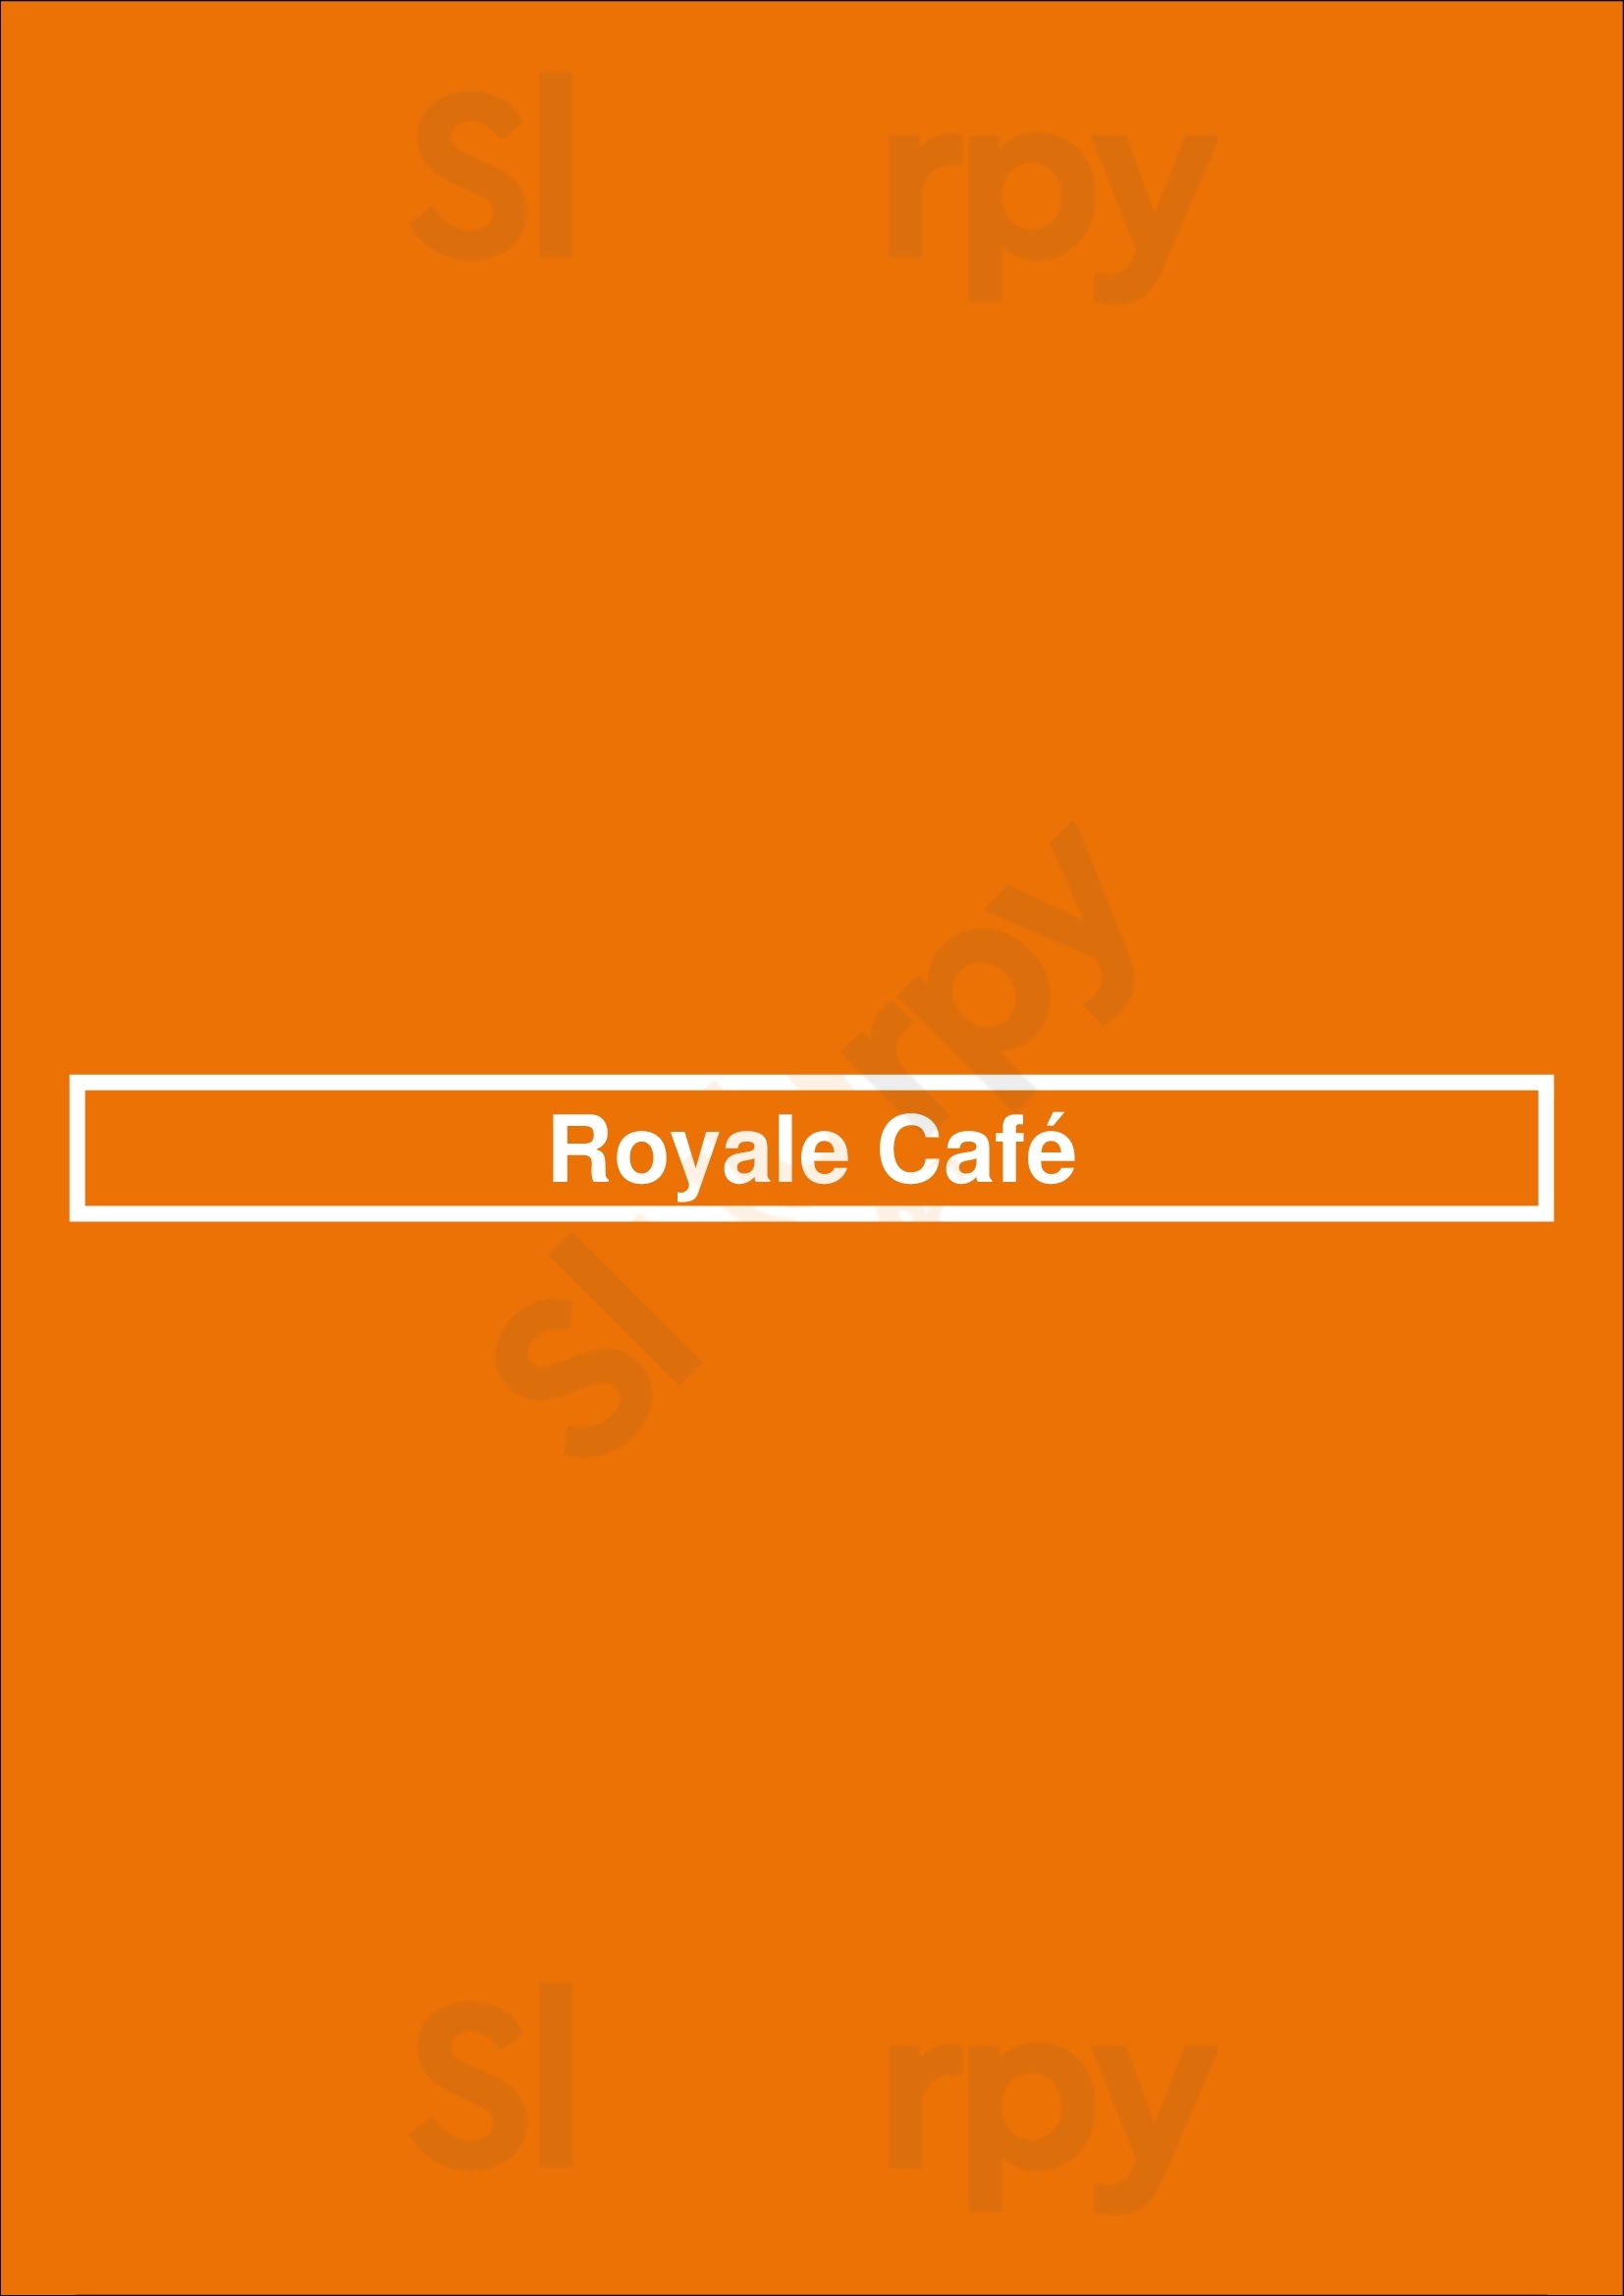 Royale Café Lisboa Menu - 1